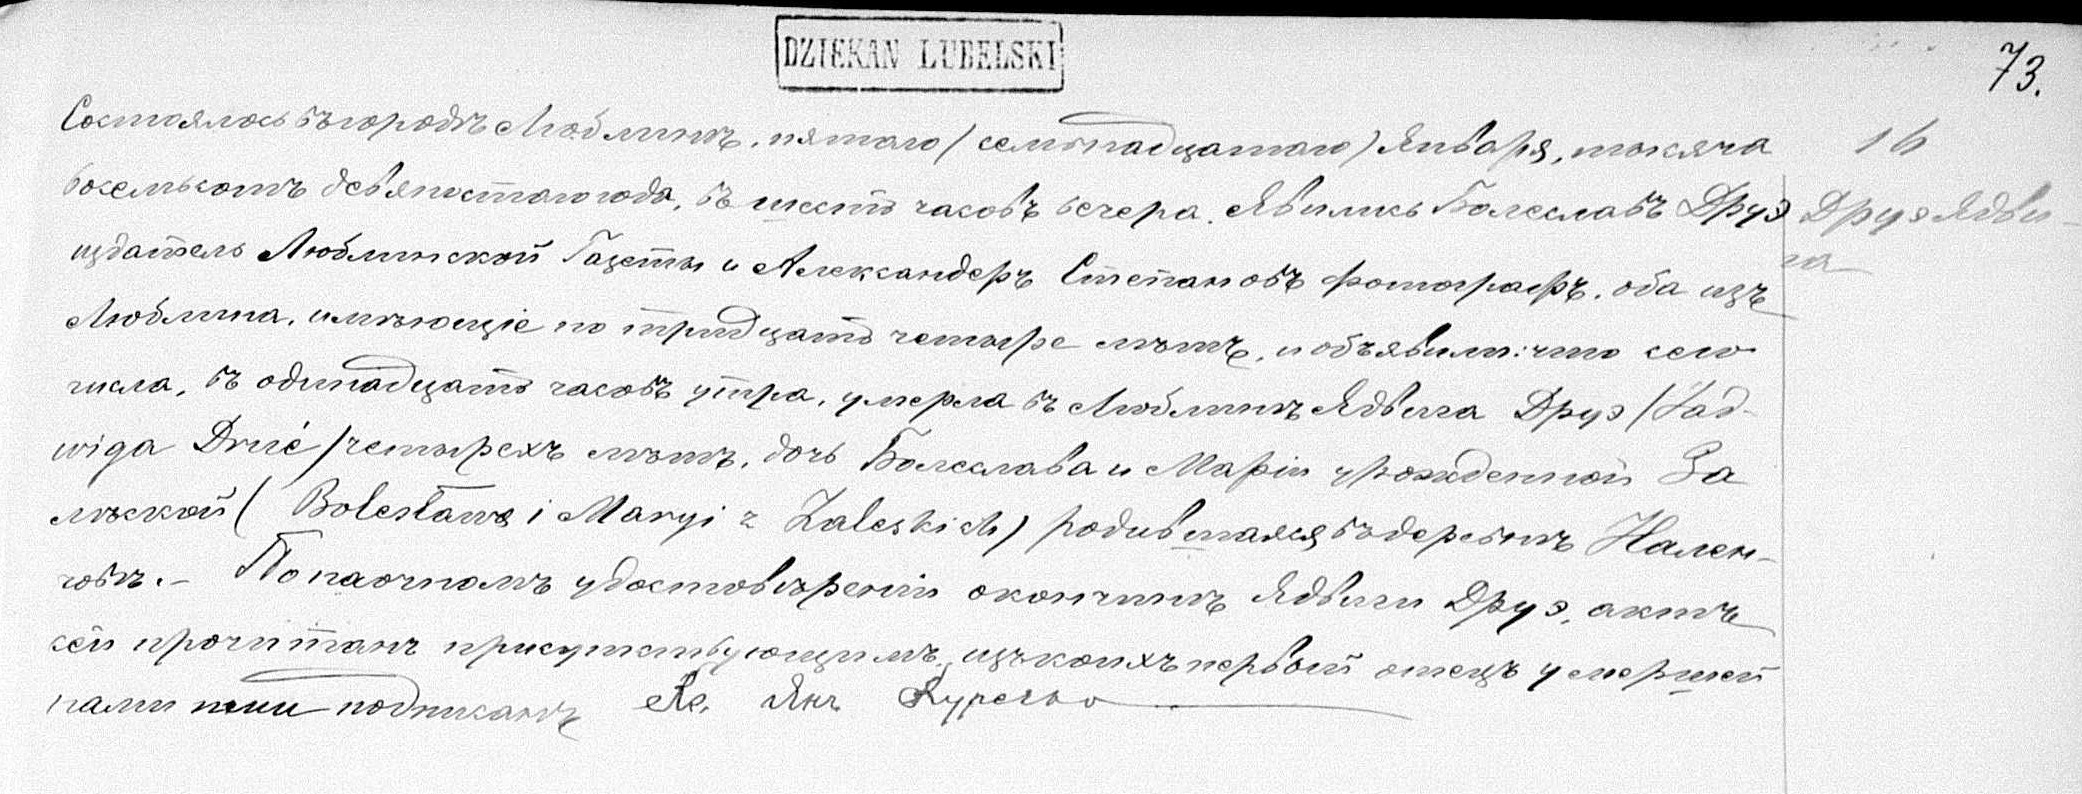 Jadzia Drue 1890 - Death Certificate child to Boleslaw.jpg